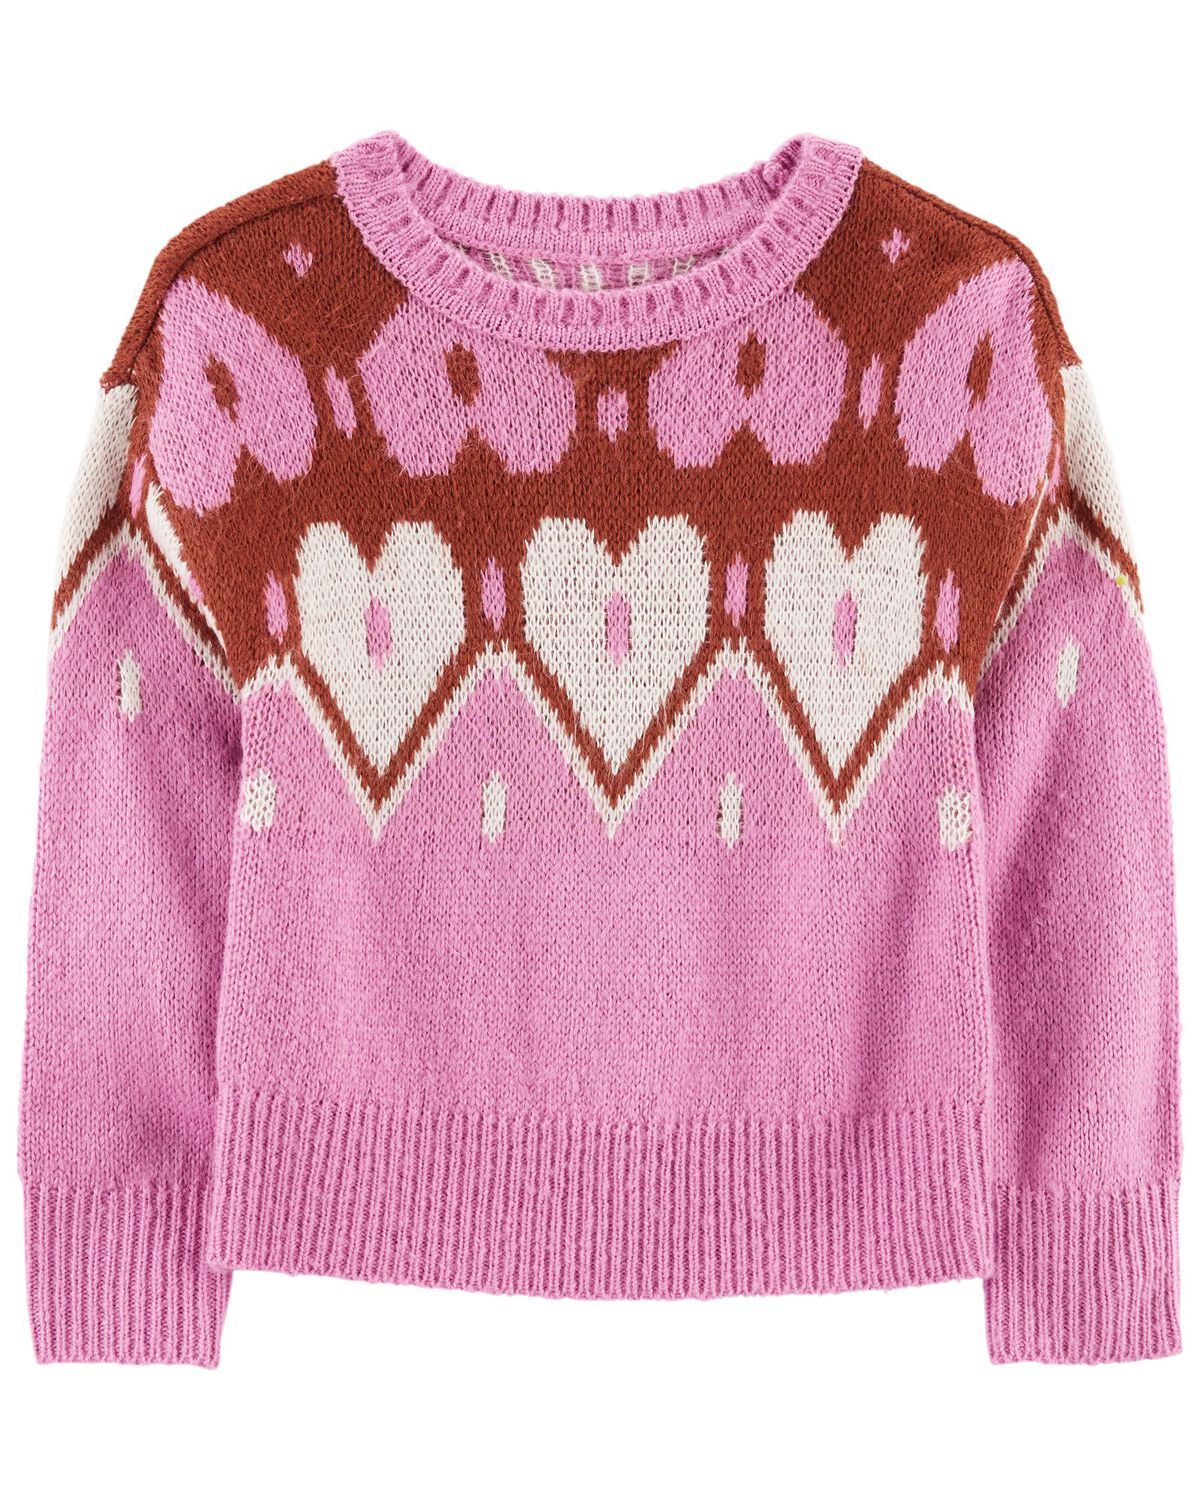 Pink Baby Heart Mohair-Like Sweater | carters.com | Carter's